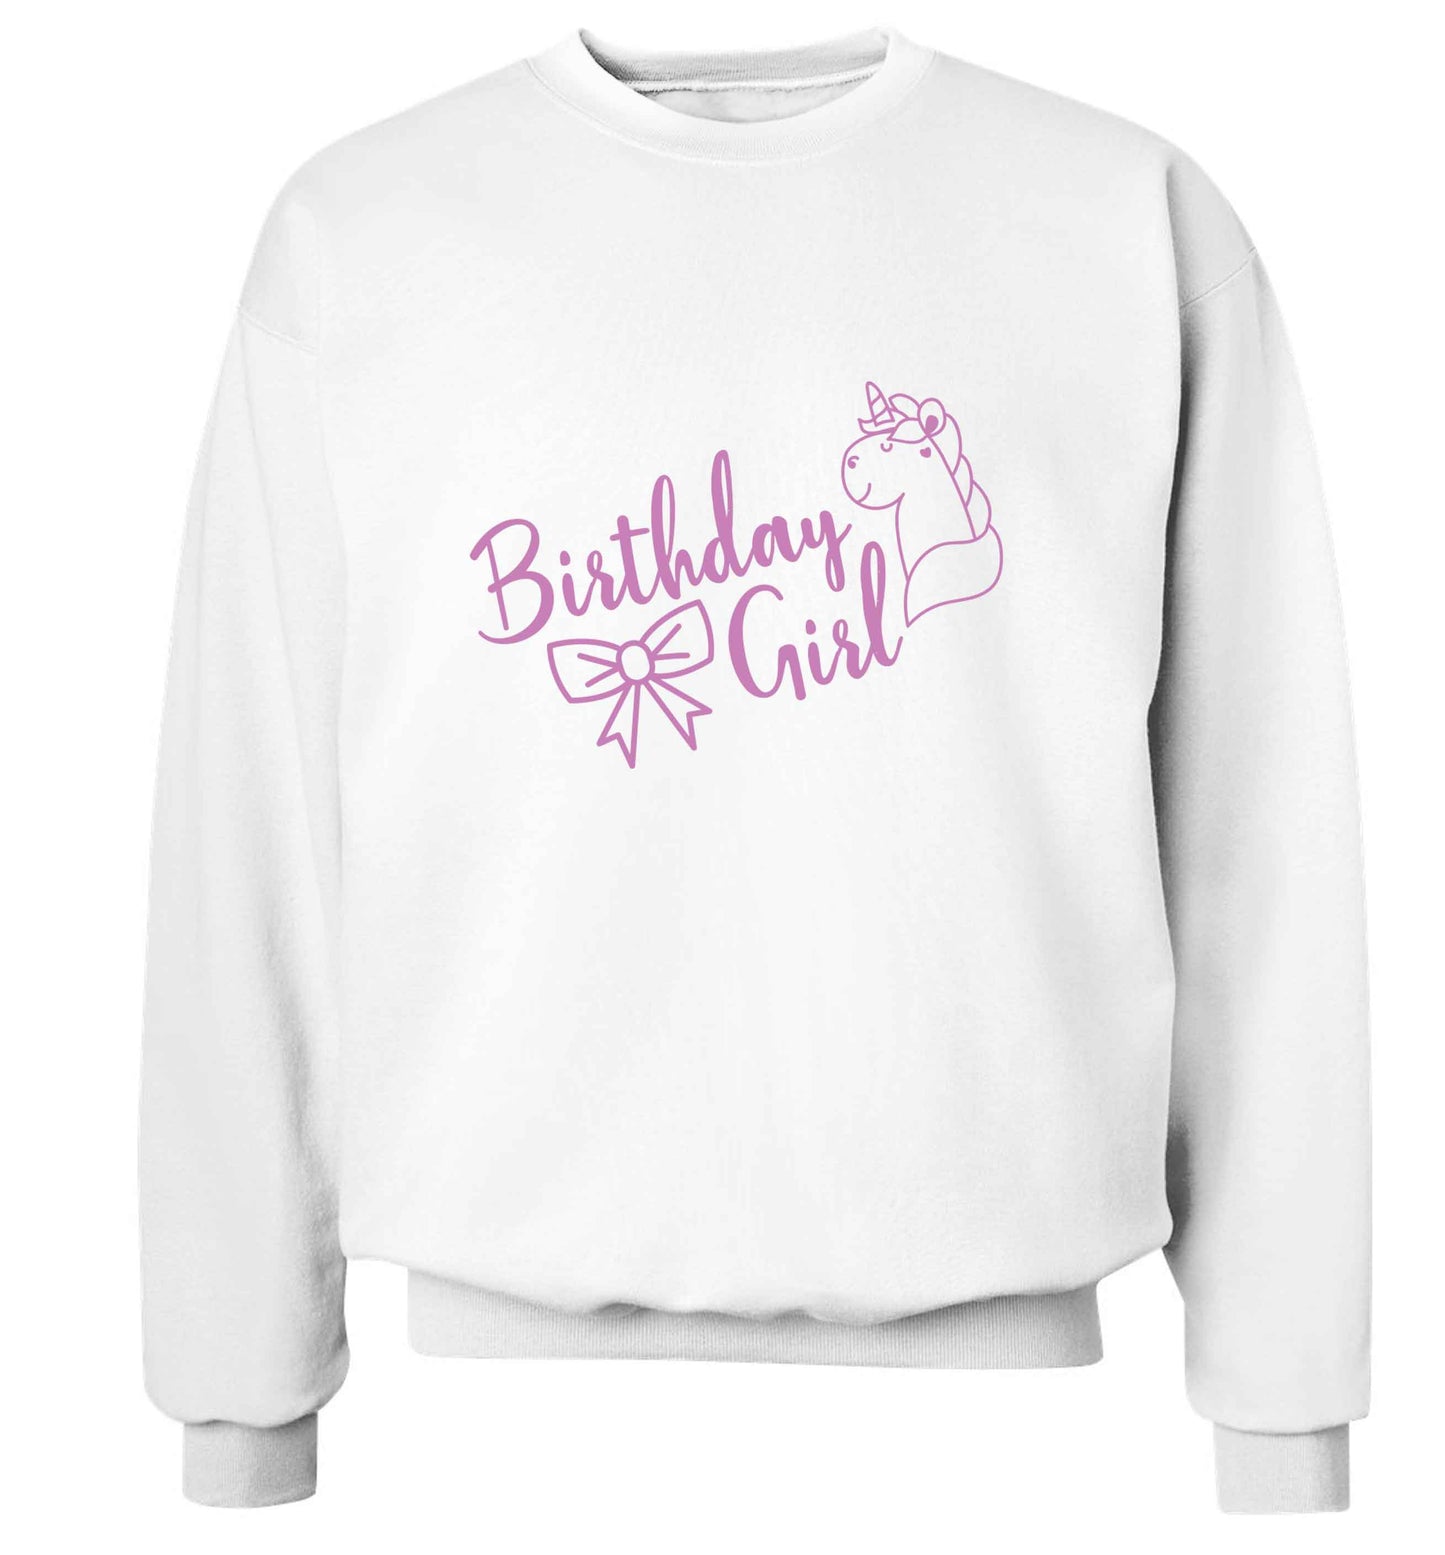 Birthday girl adult's unisex white sweater 2XL